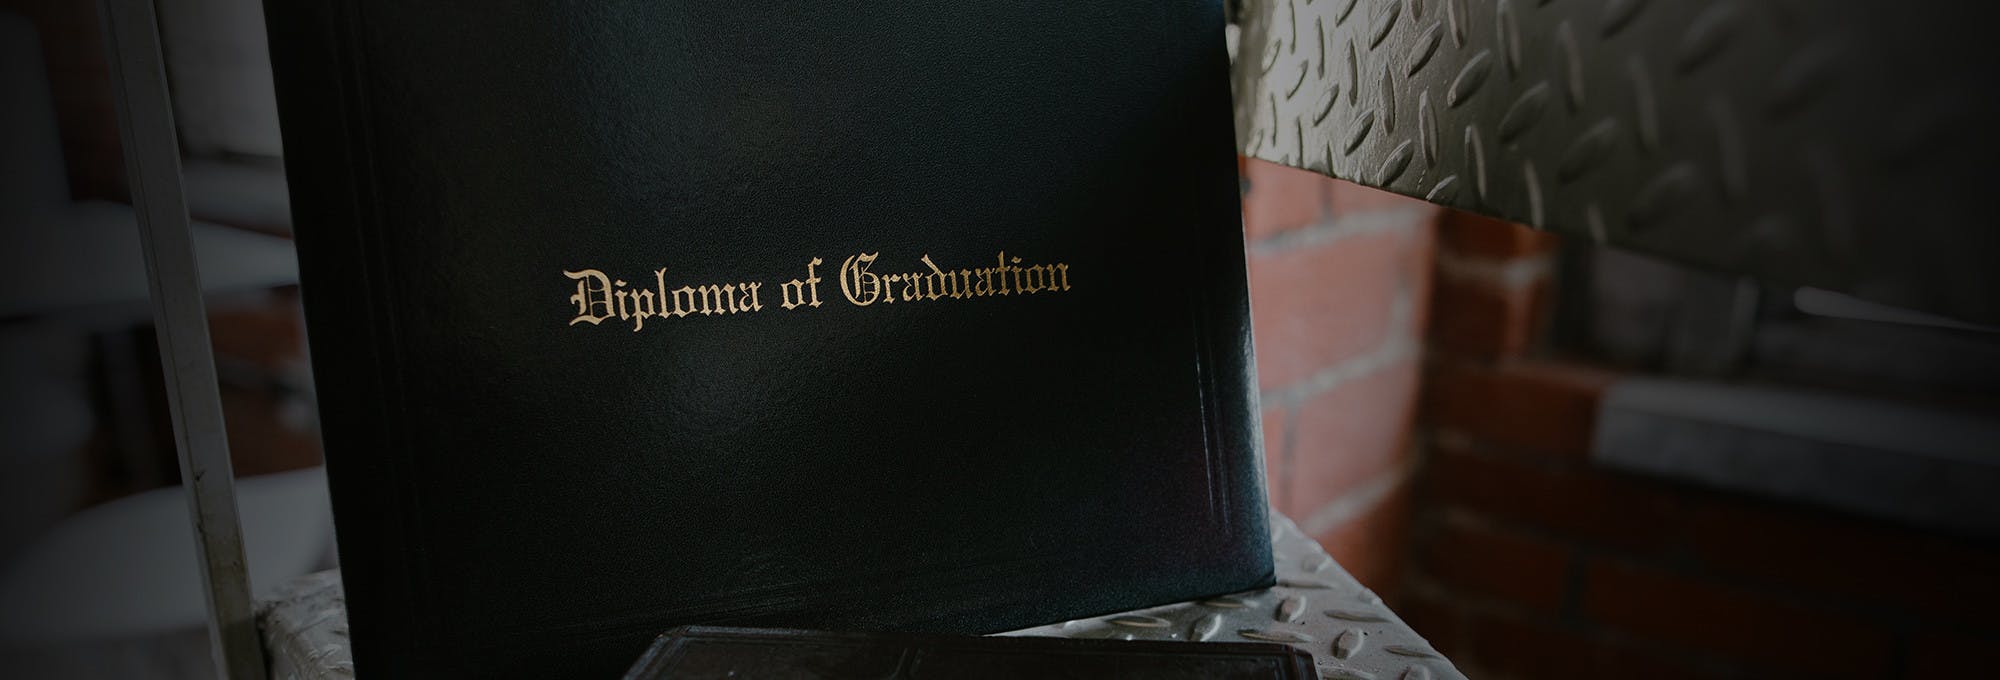 Diploma of graduation folder with a diploma inside